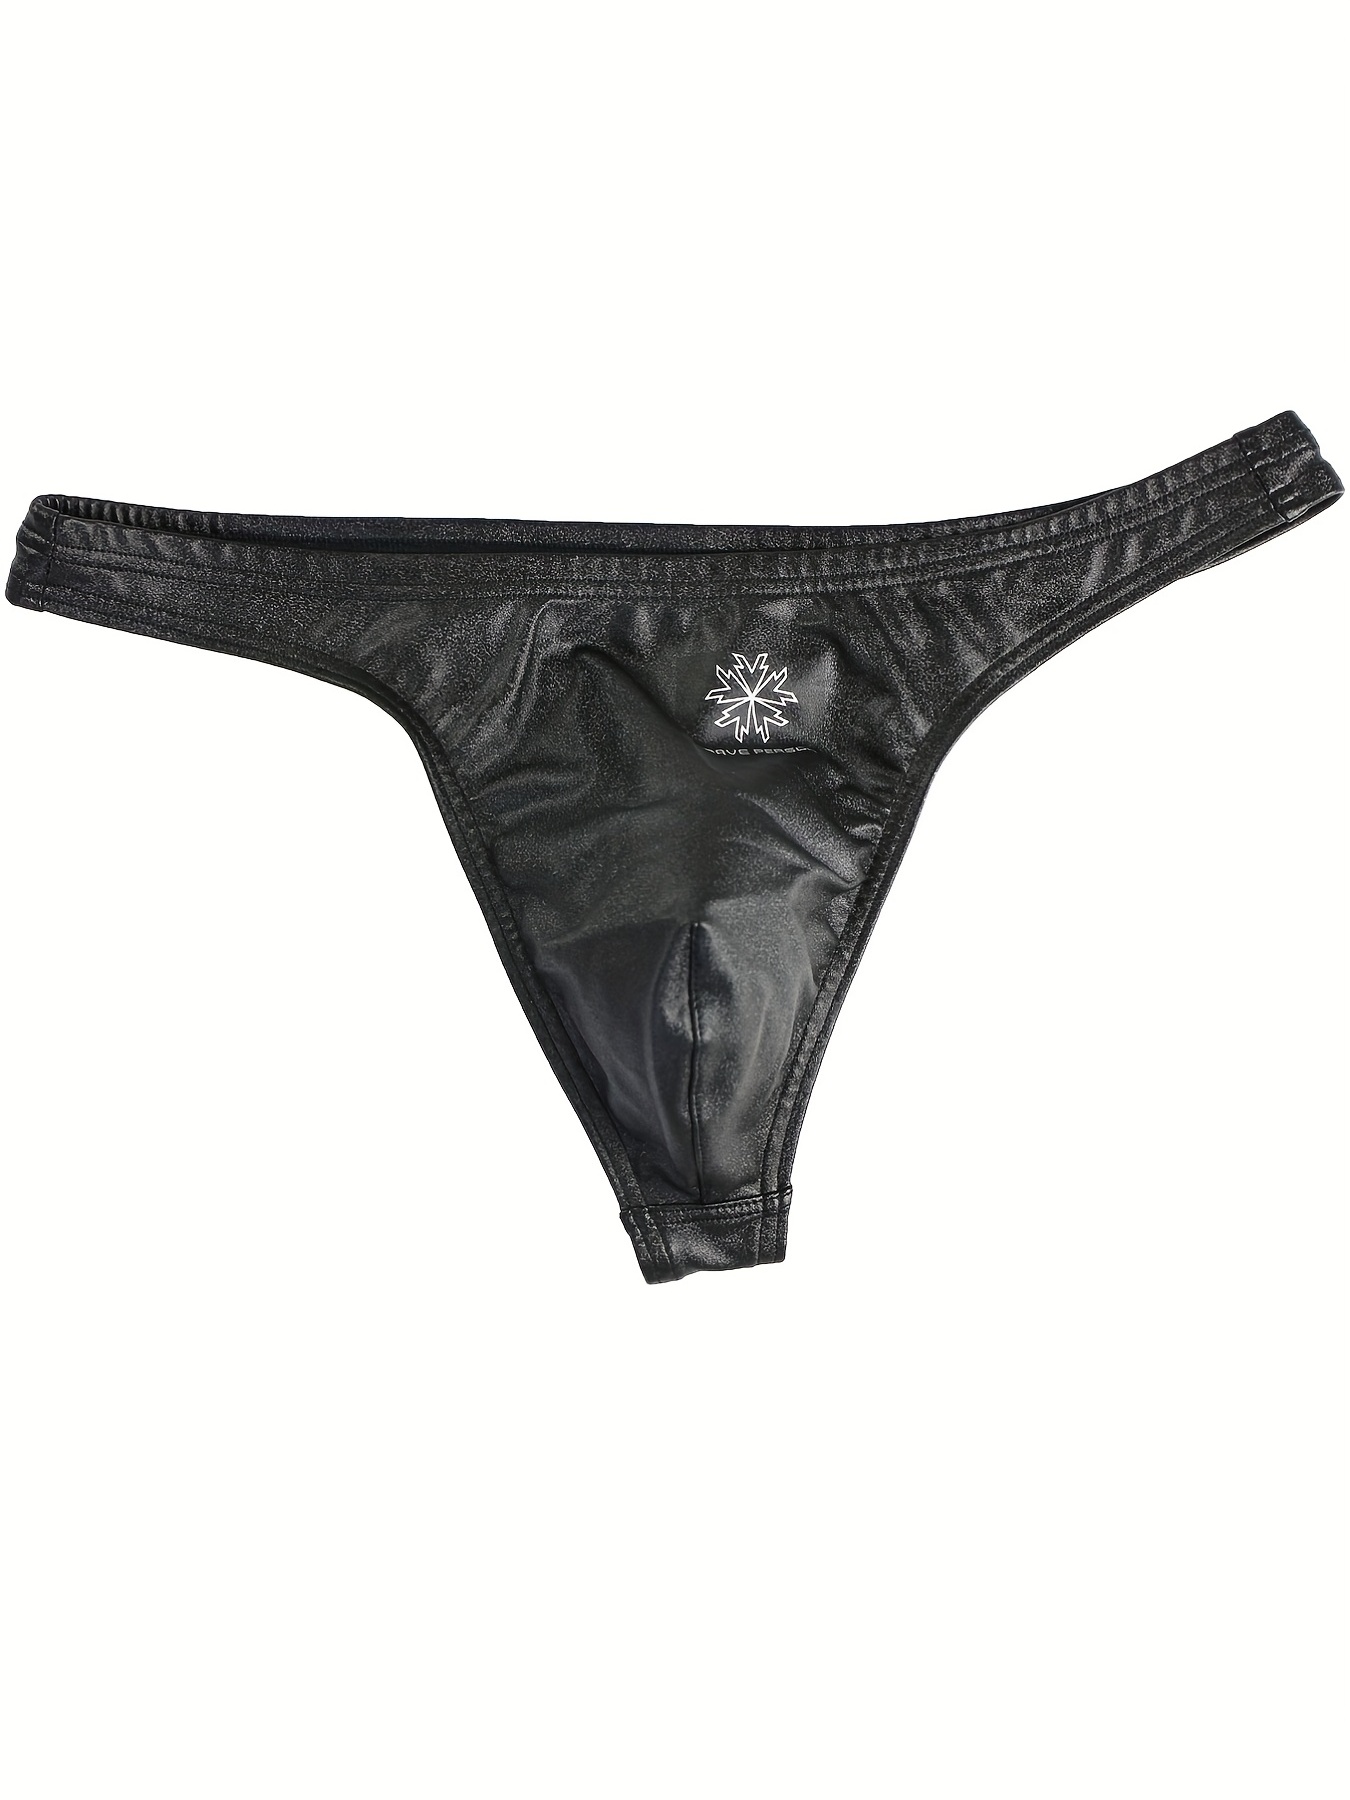 Men's C-String Lingerie Bikini Underwear Sexy C String Thong Underwears  Bulge Pouch Enhancer Thongs Trunks Briefs (Black,One Size)